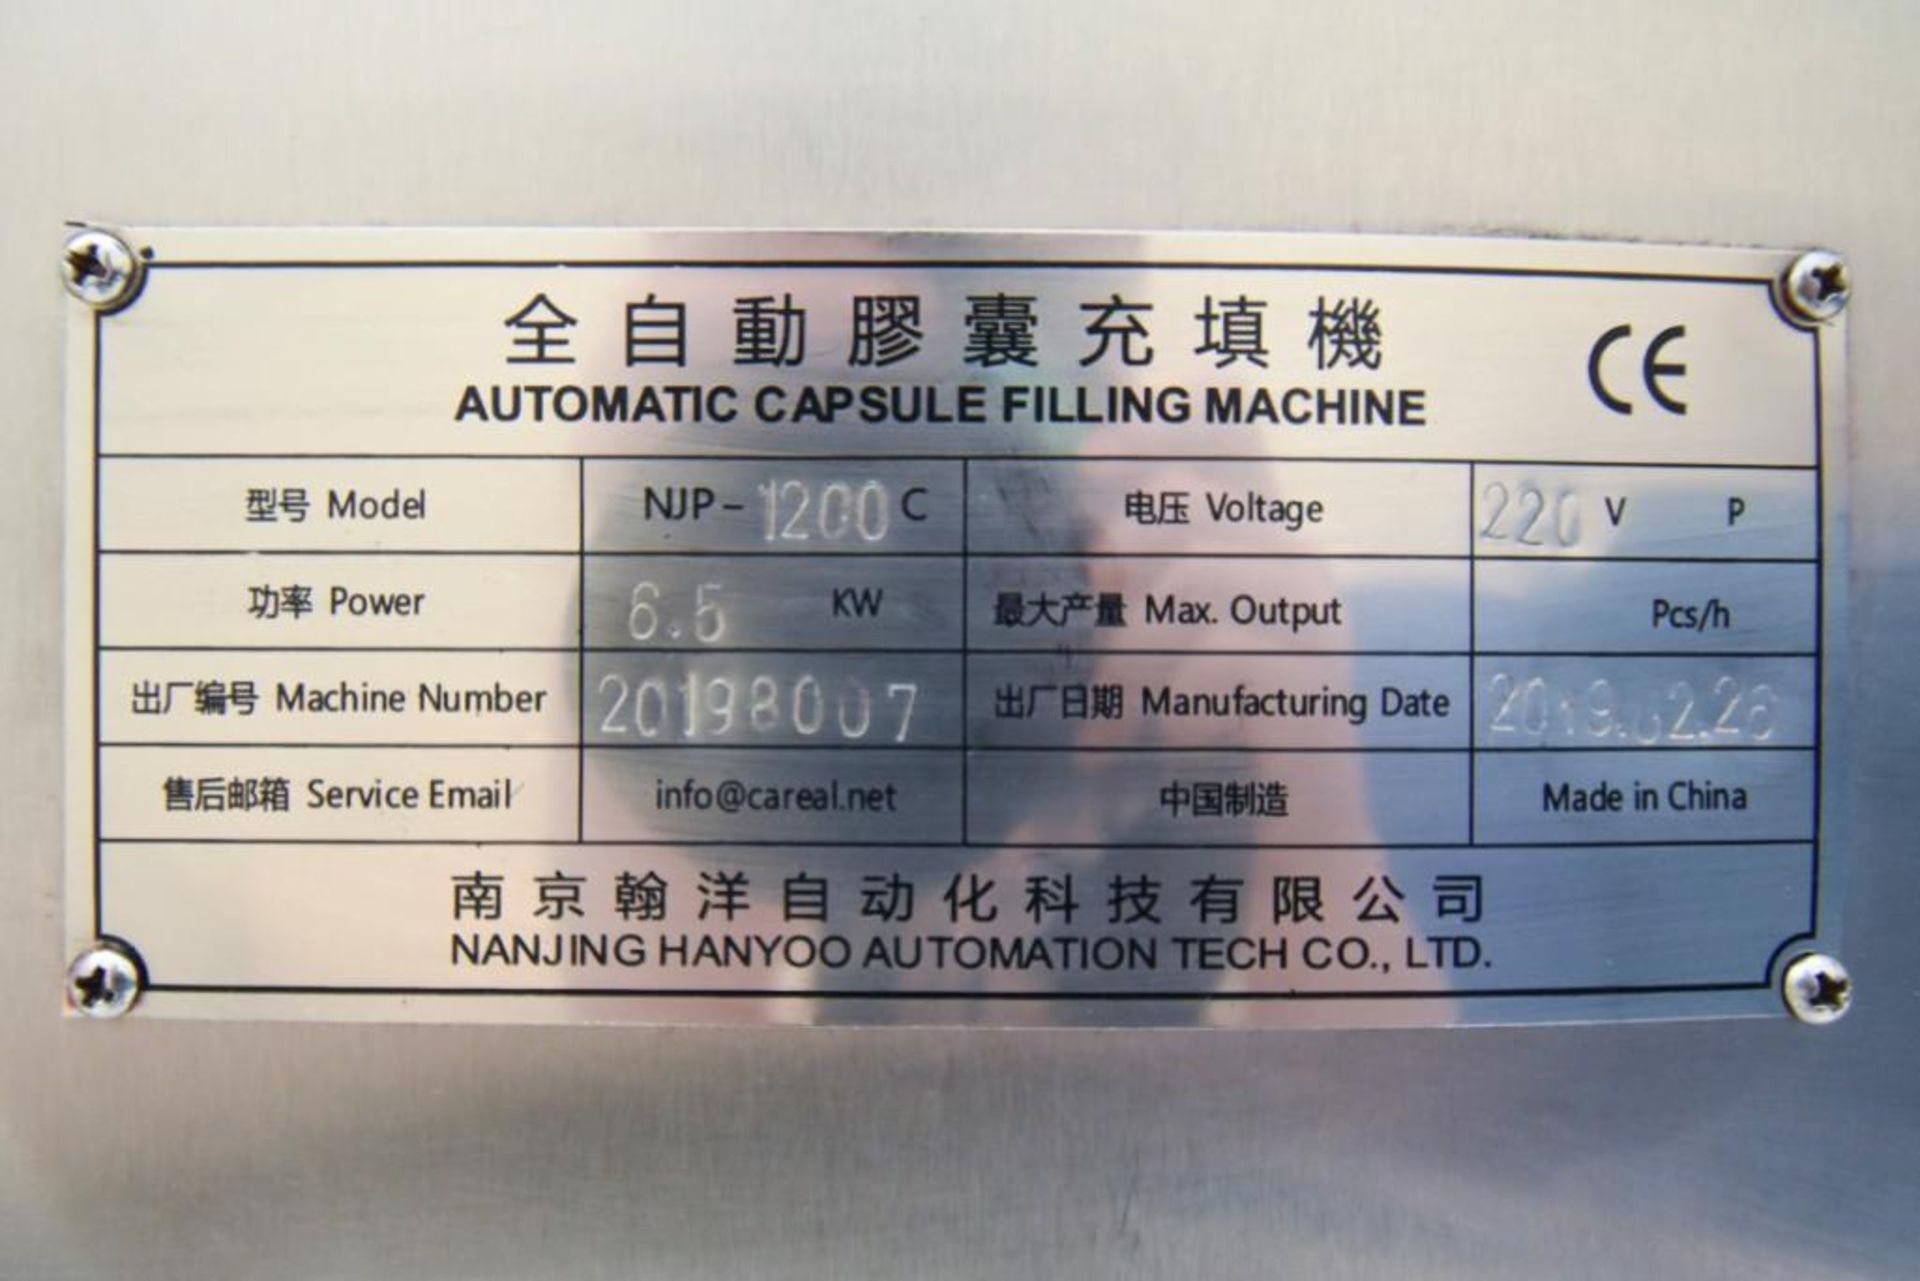 Hanyoo NJP 1200C Automatic Encapsulation Machine - Image 10 of 10